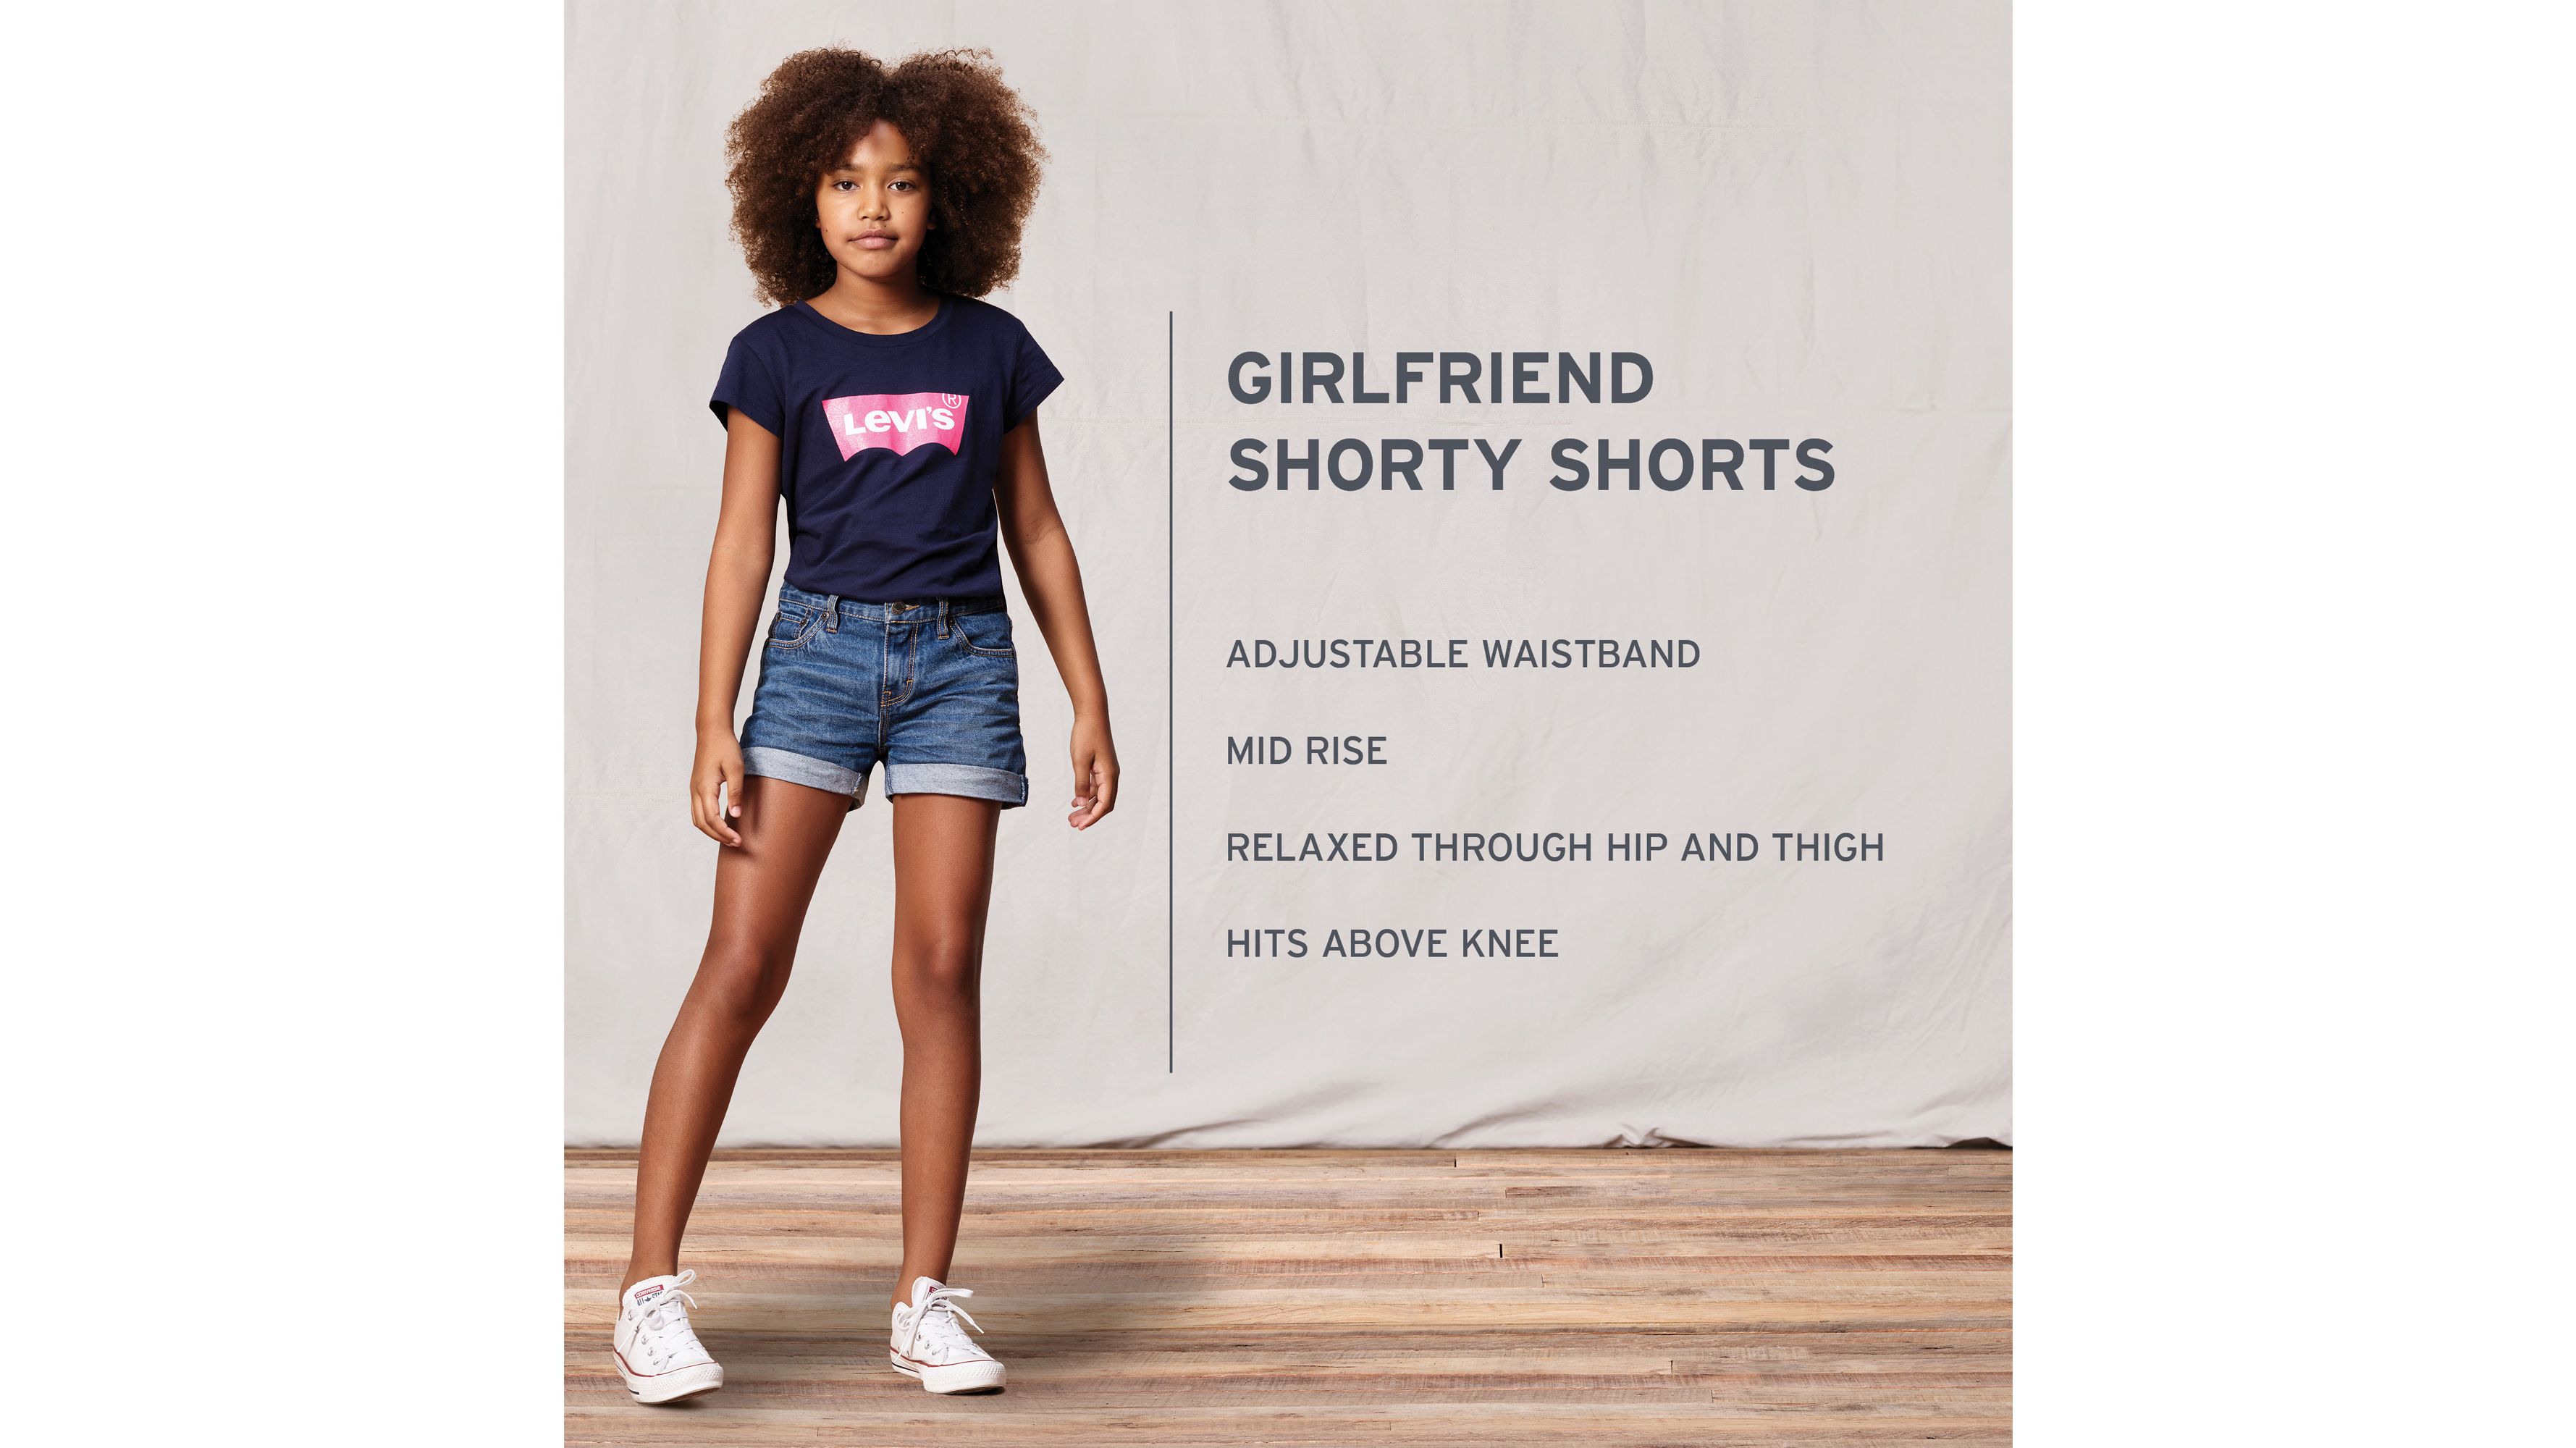 Actualizar 73+ imagen levi’s girlfriend shorts